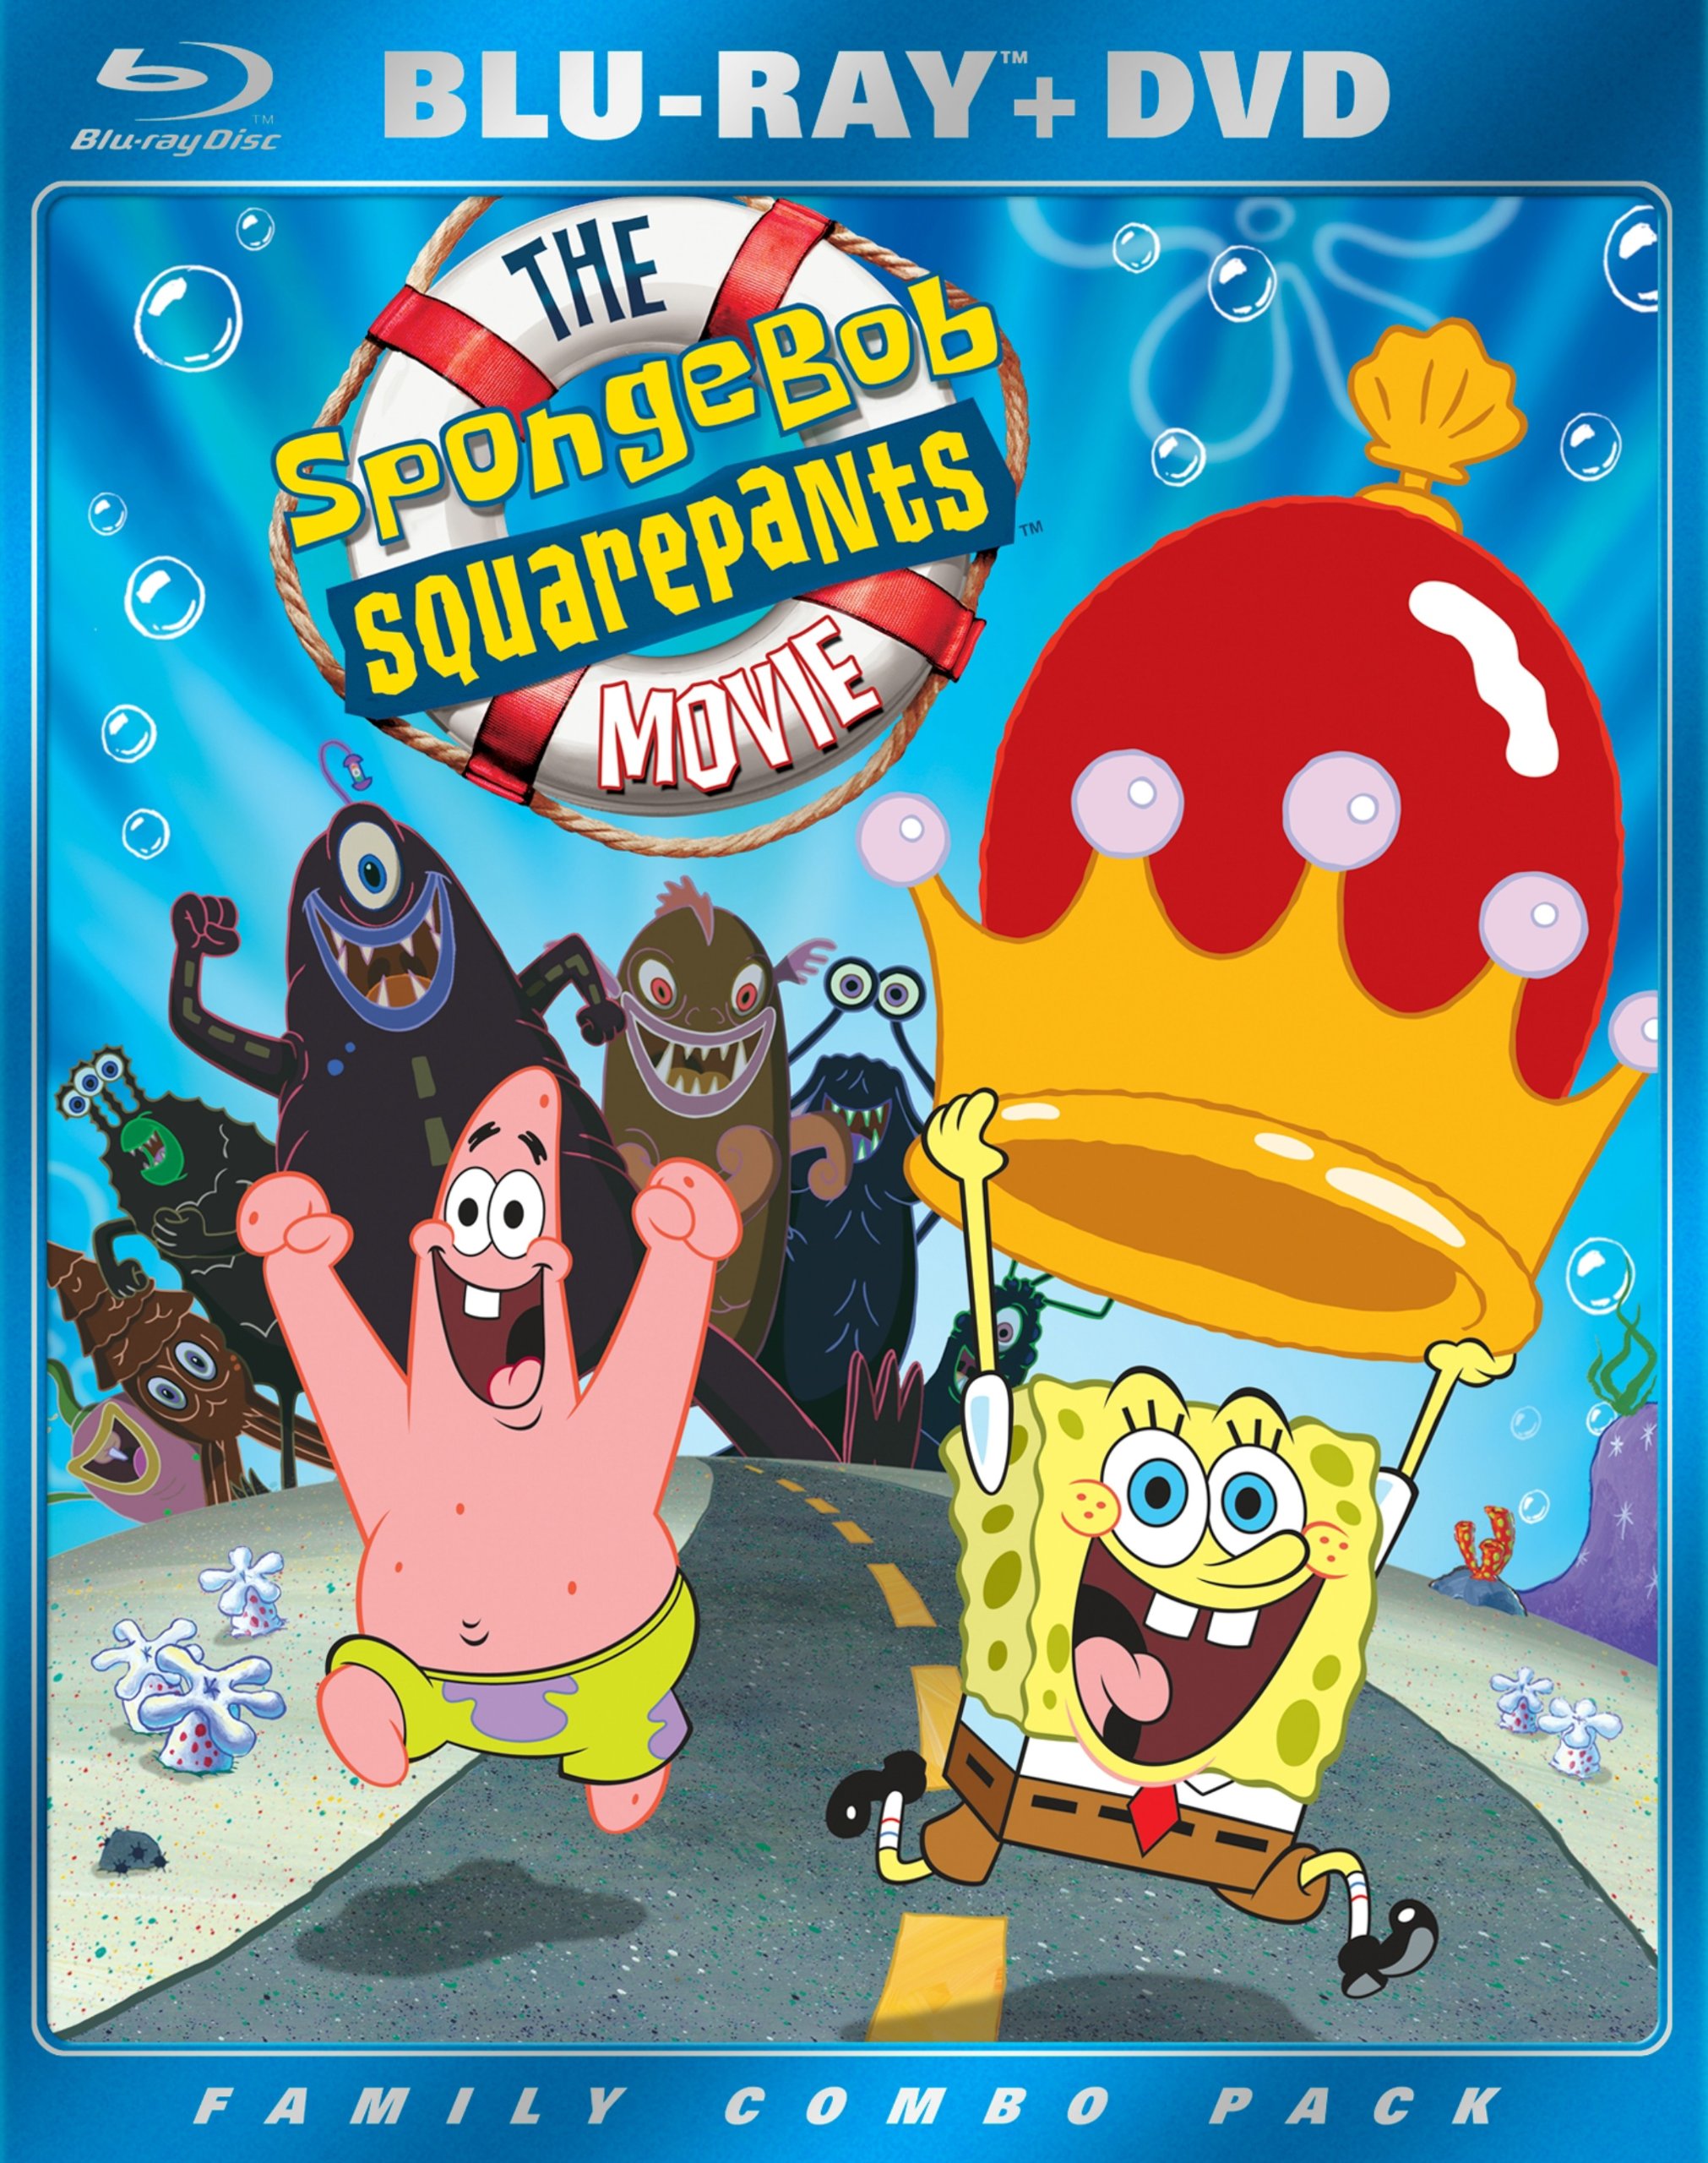 The Spongebob Squarepants Movie Dvd Release Date March 1 2005